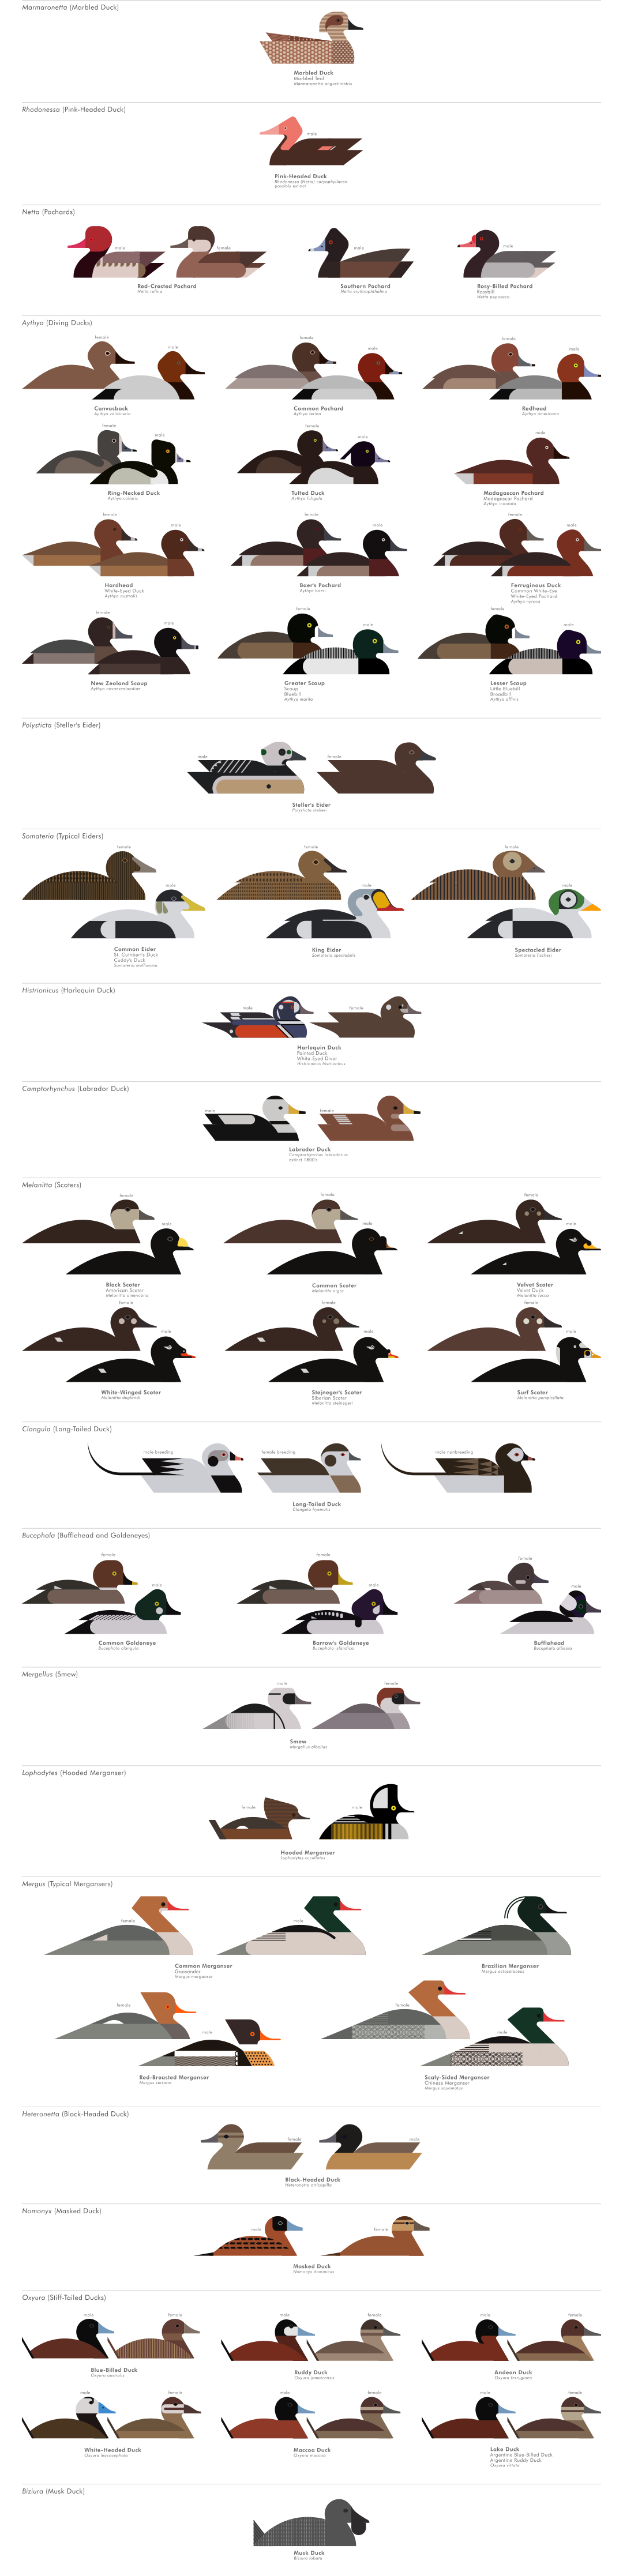 scott partridge - ave - avian vector encyclopedia - diving ducks - bird vector art